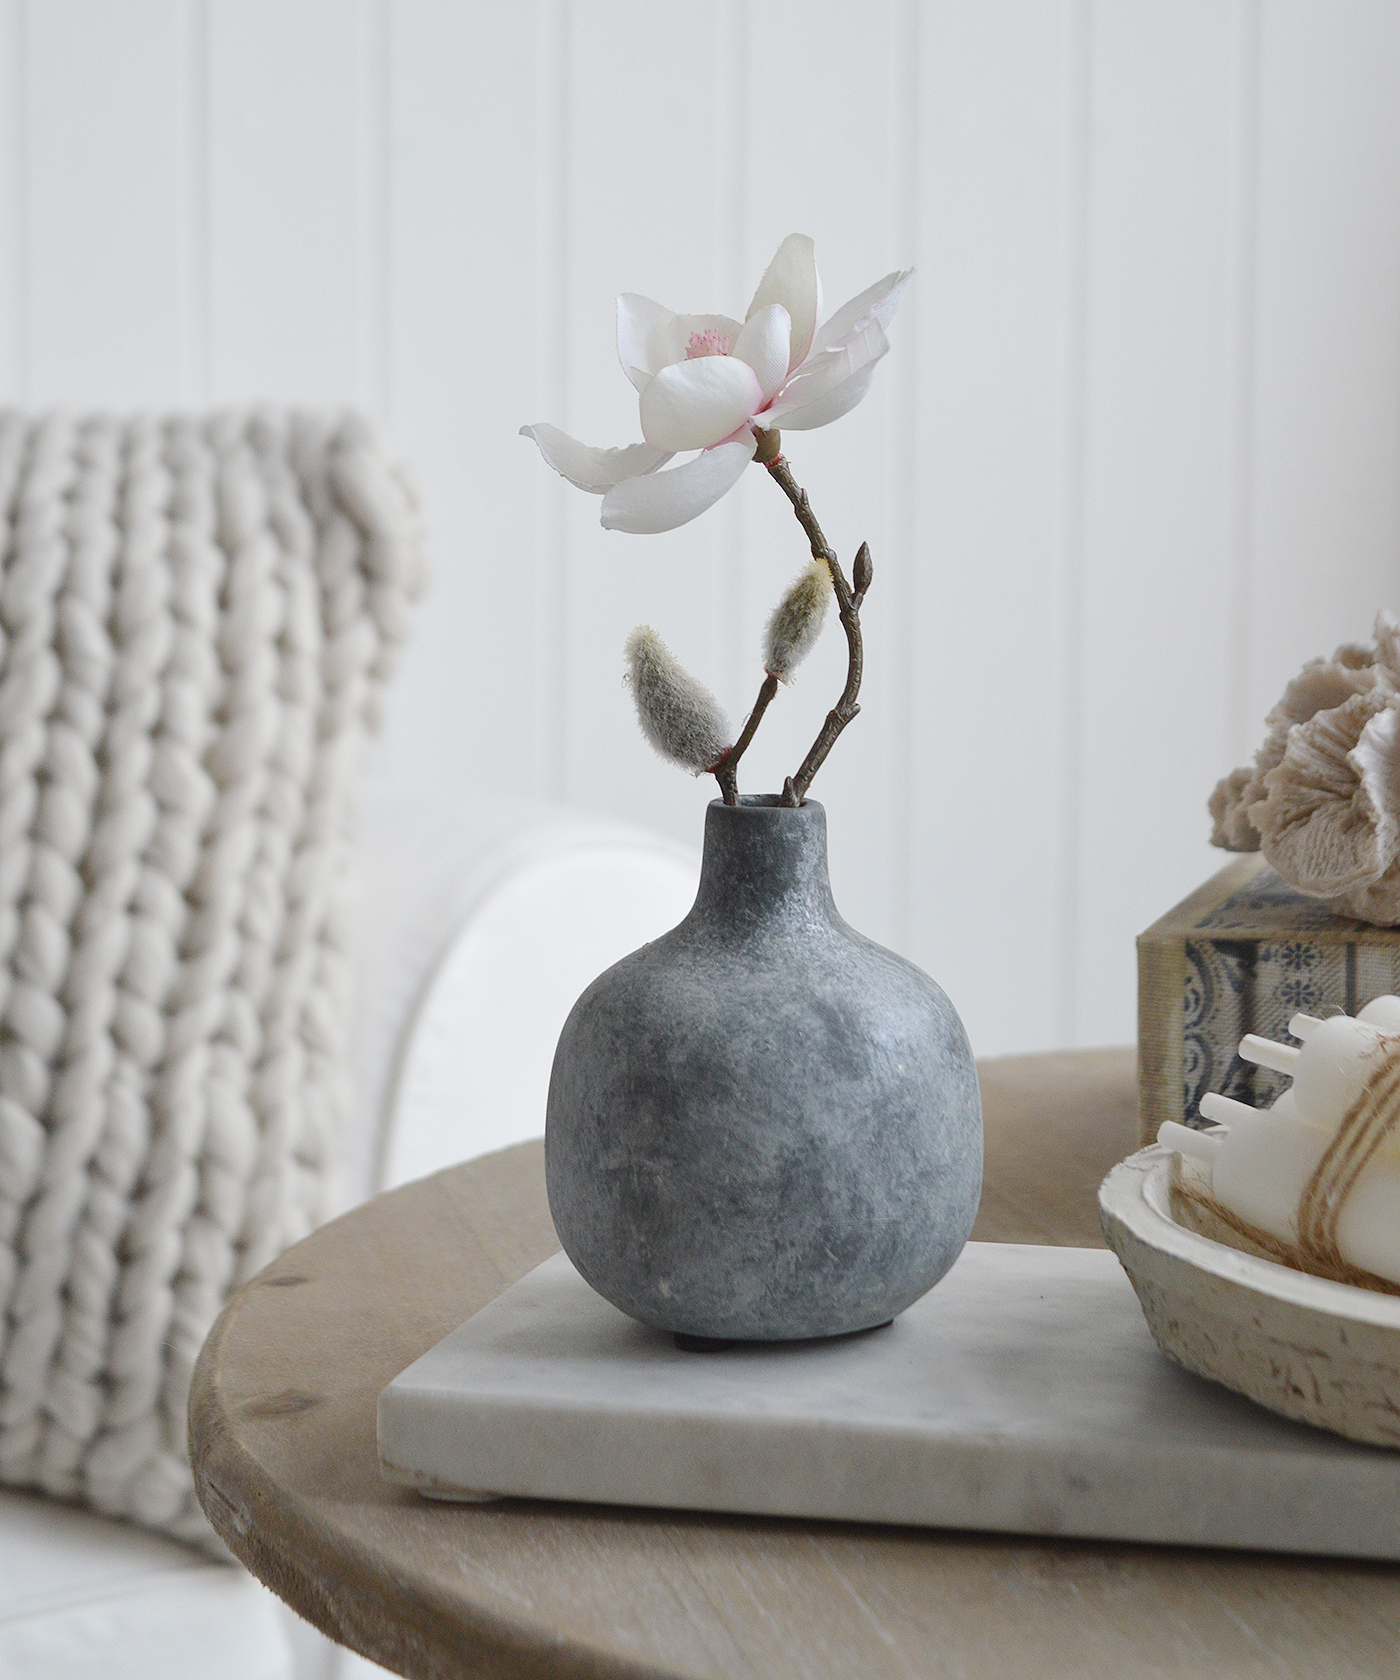 Slate grey coloured small Bradley pot with a stem of Magnolia